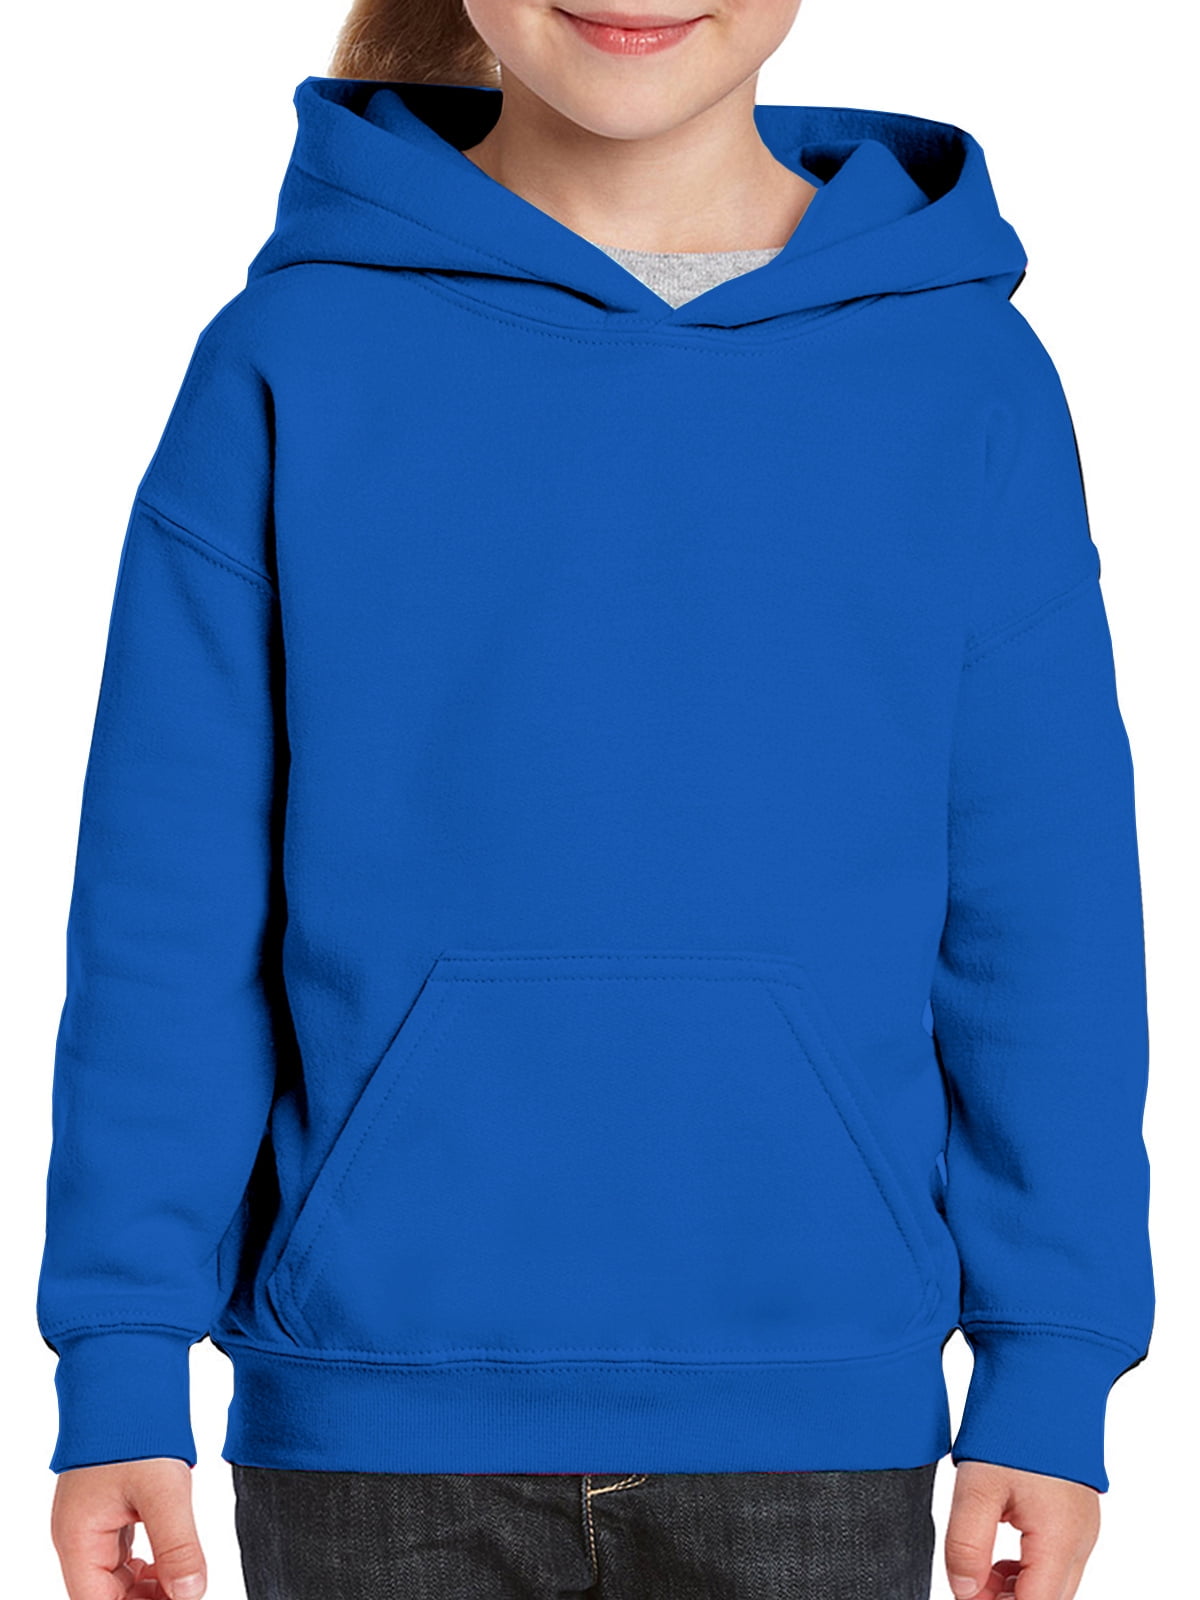 Hoodies for Teens Hoody for Boy Girls Size 6-8 10-12 14-16 18-20 - S M L XL  - Age 6 to 20 Years Old Kids Hoody Blue Youth Hoodie Kid Pullover Hooded  Sweatshirt | Kapuzenshirts